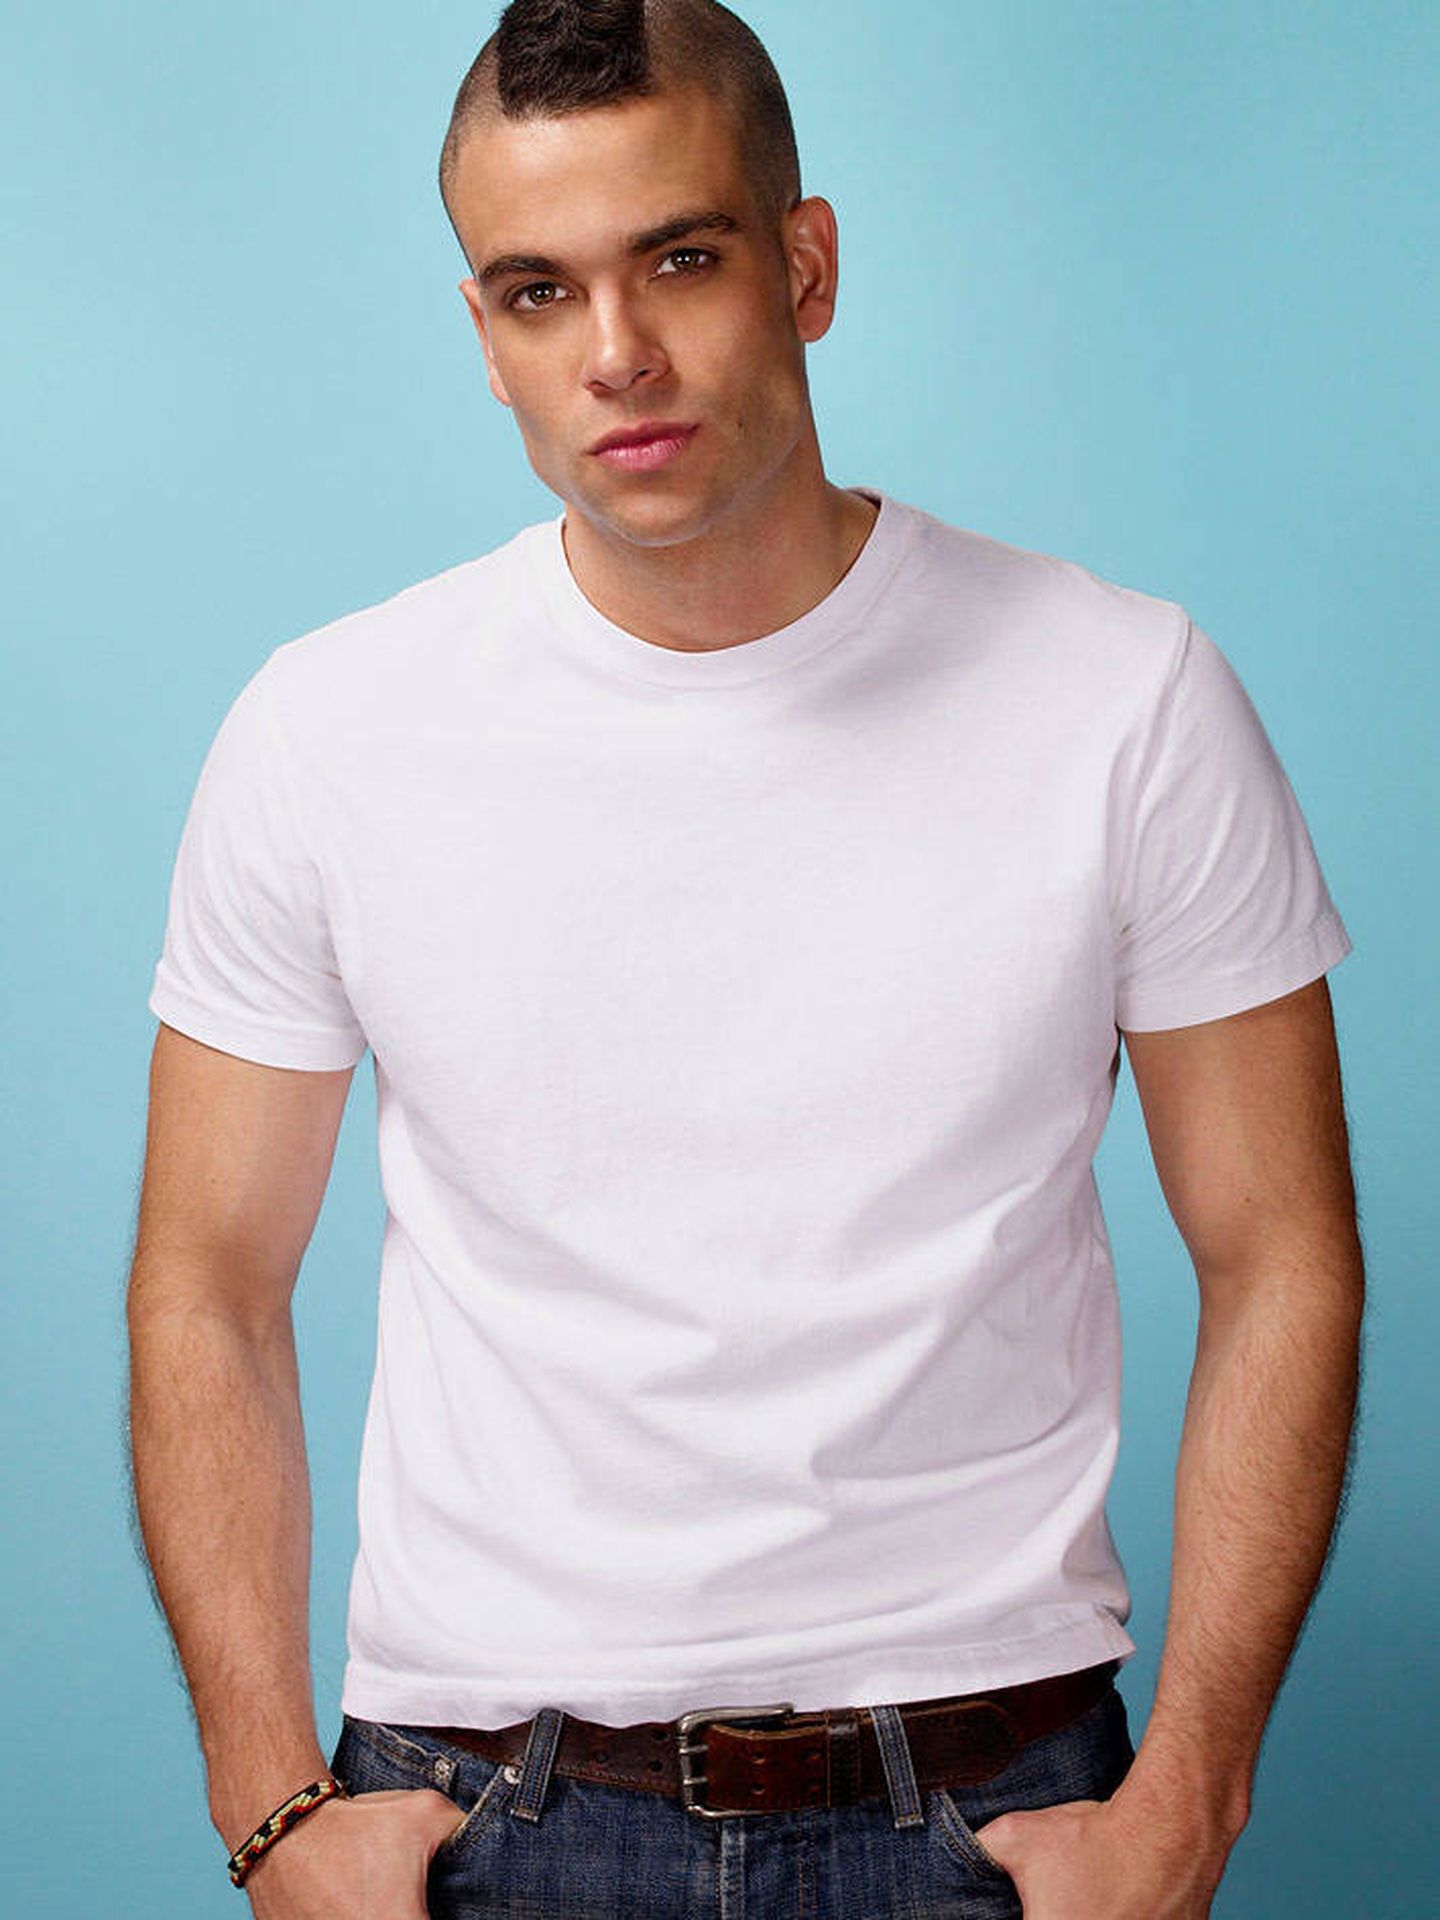 Mark Salling en una imagen promocional de la serie 'Glee'.